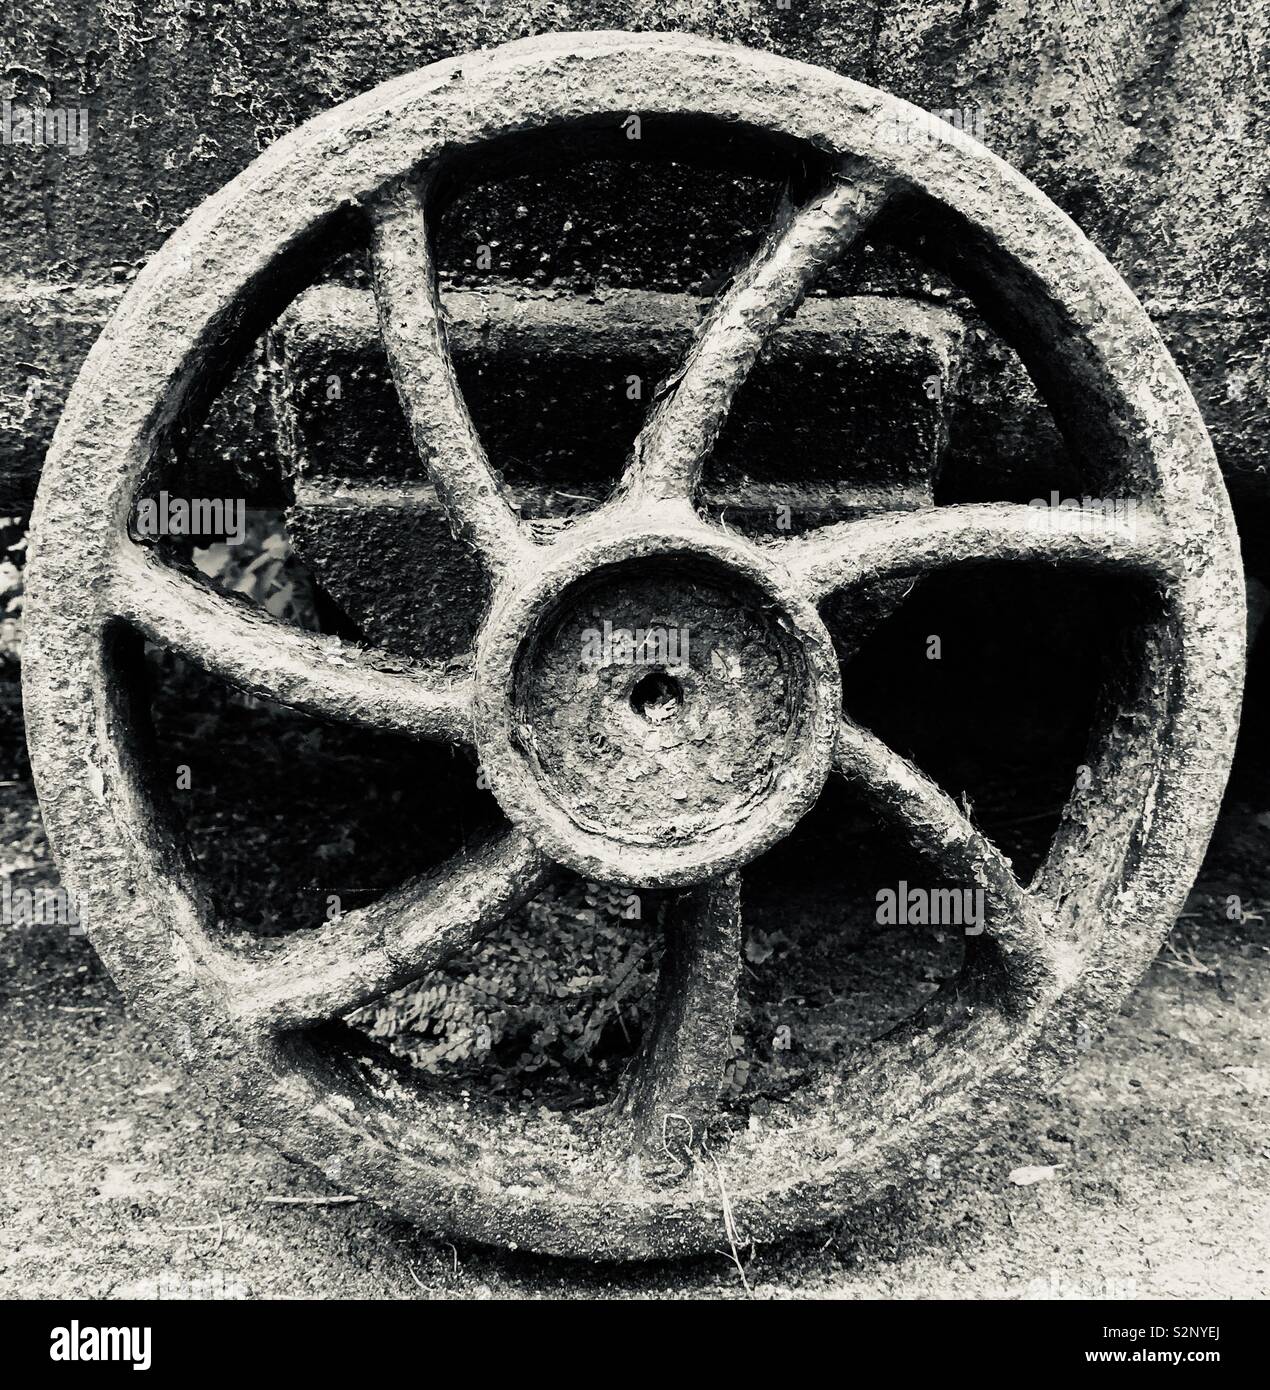 Wheel from mining coal truck dram Stock Photo